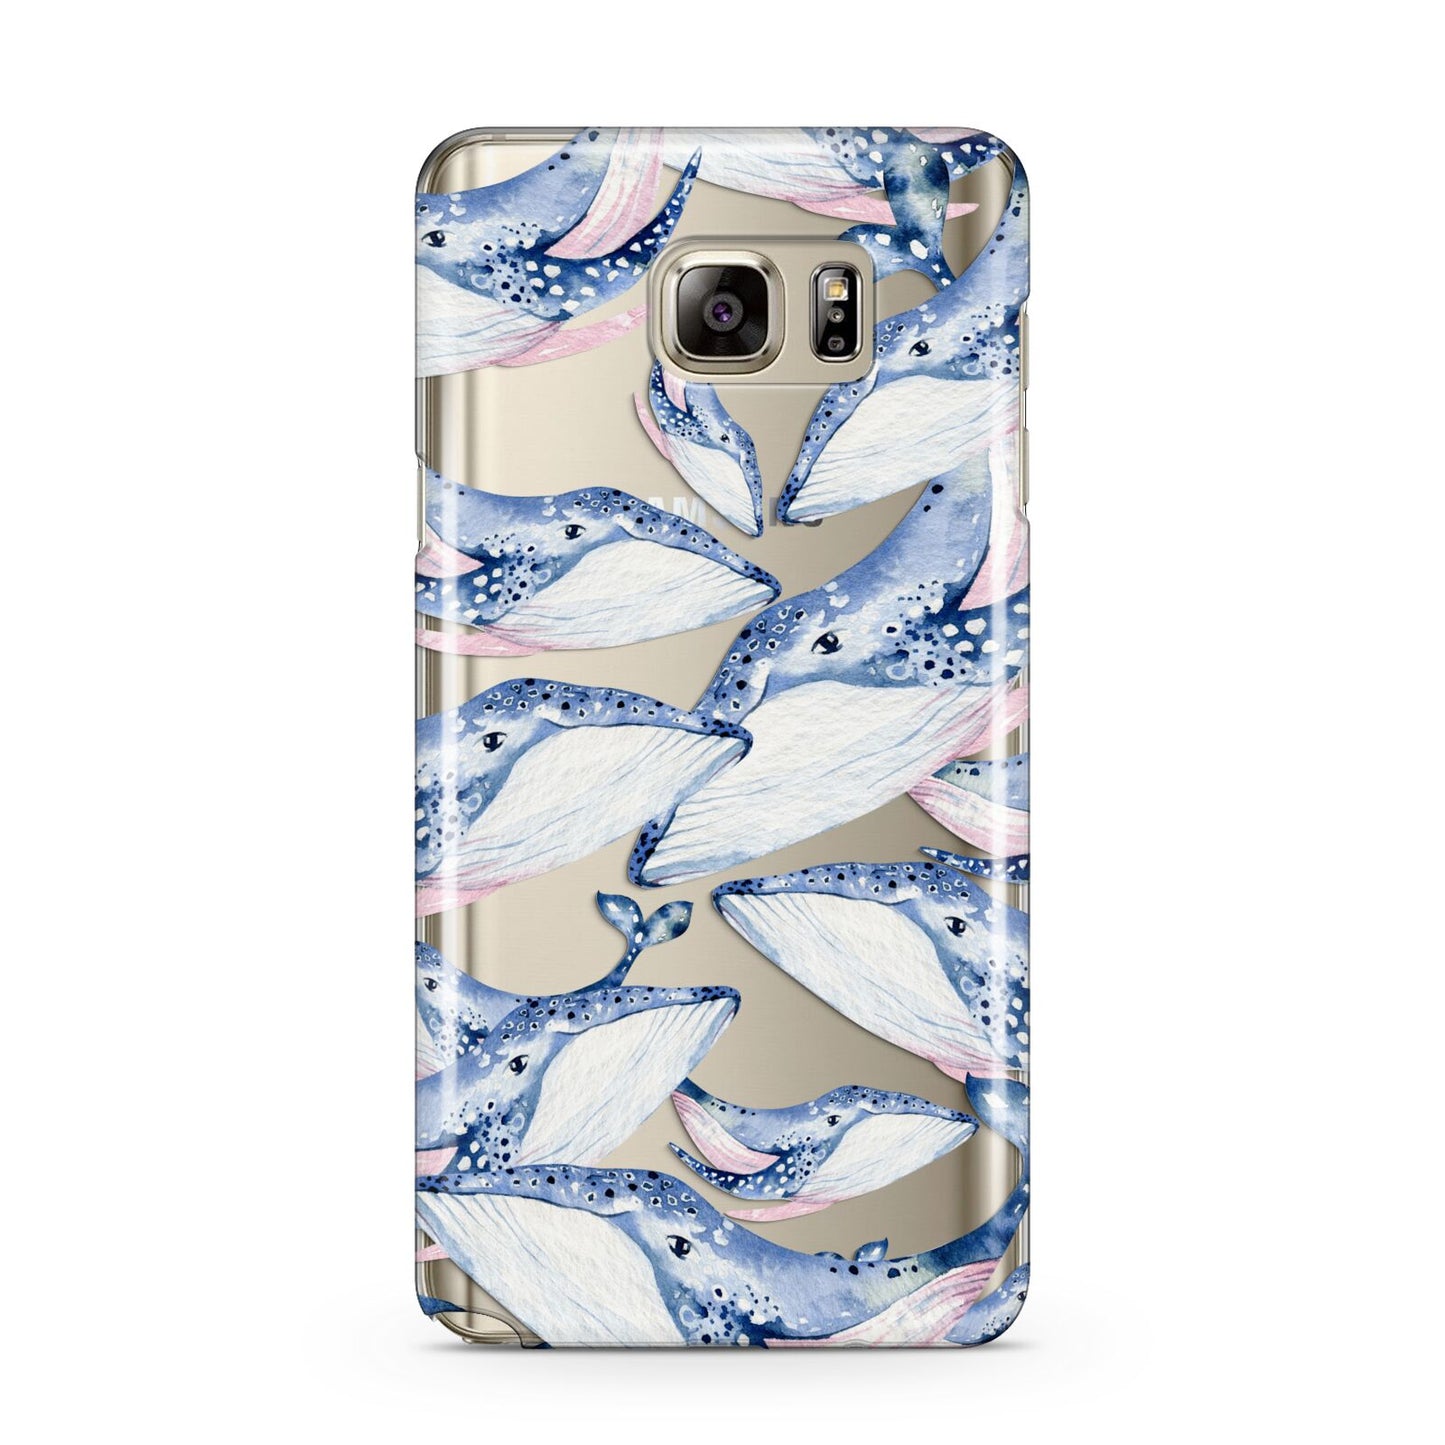 Whale Samsung Galaxy Note 5 Case